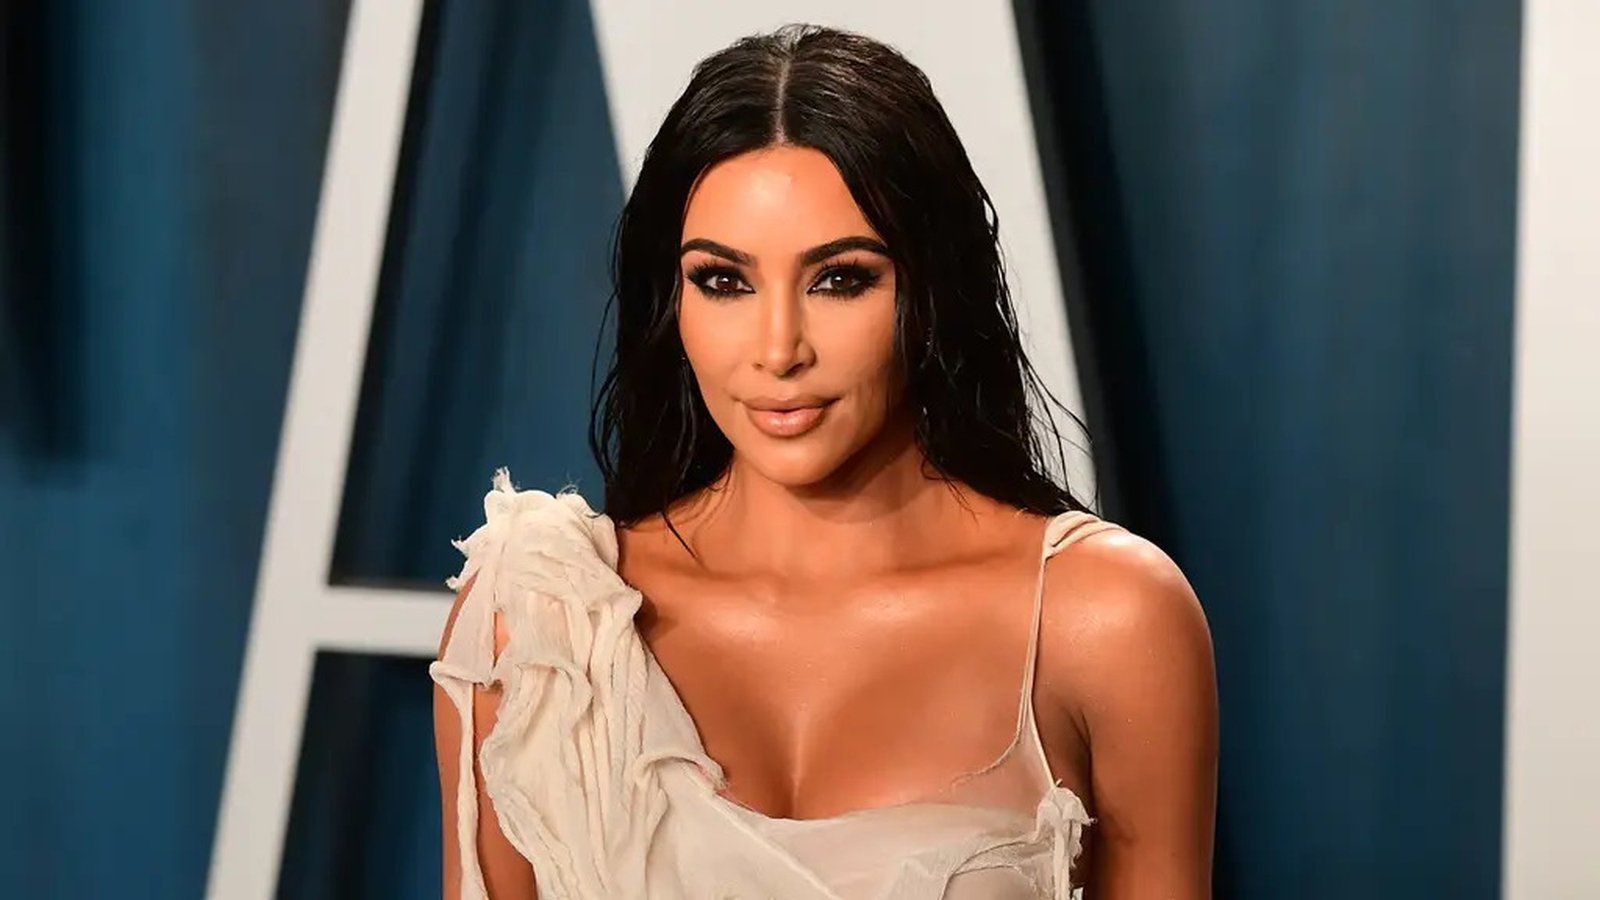 Kim Kardashian enlists sports stars for new fashion campaign